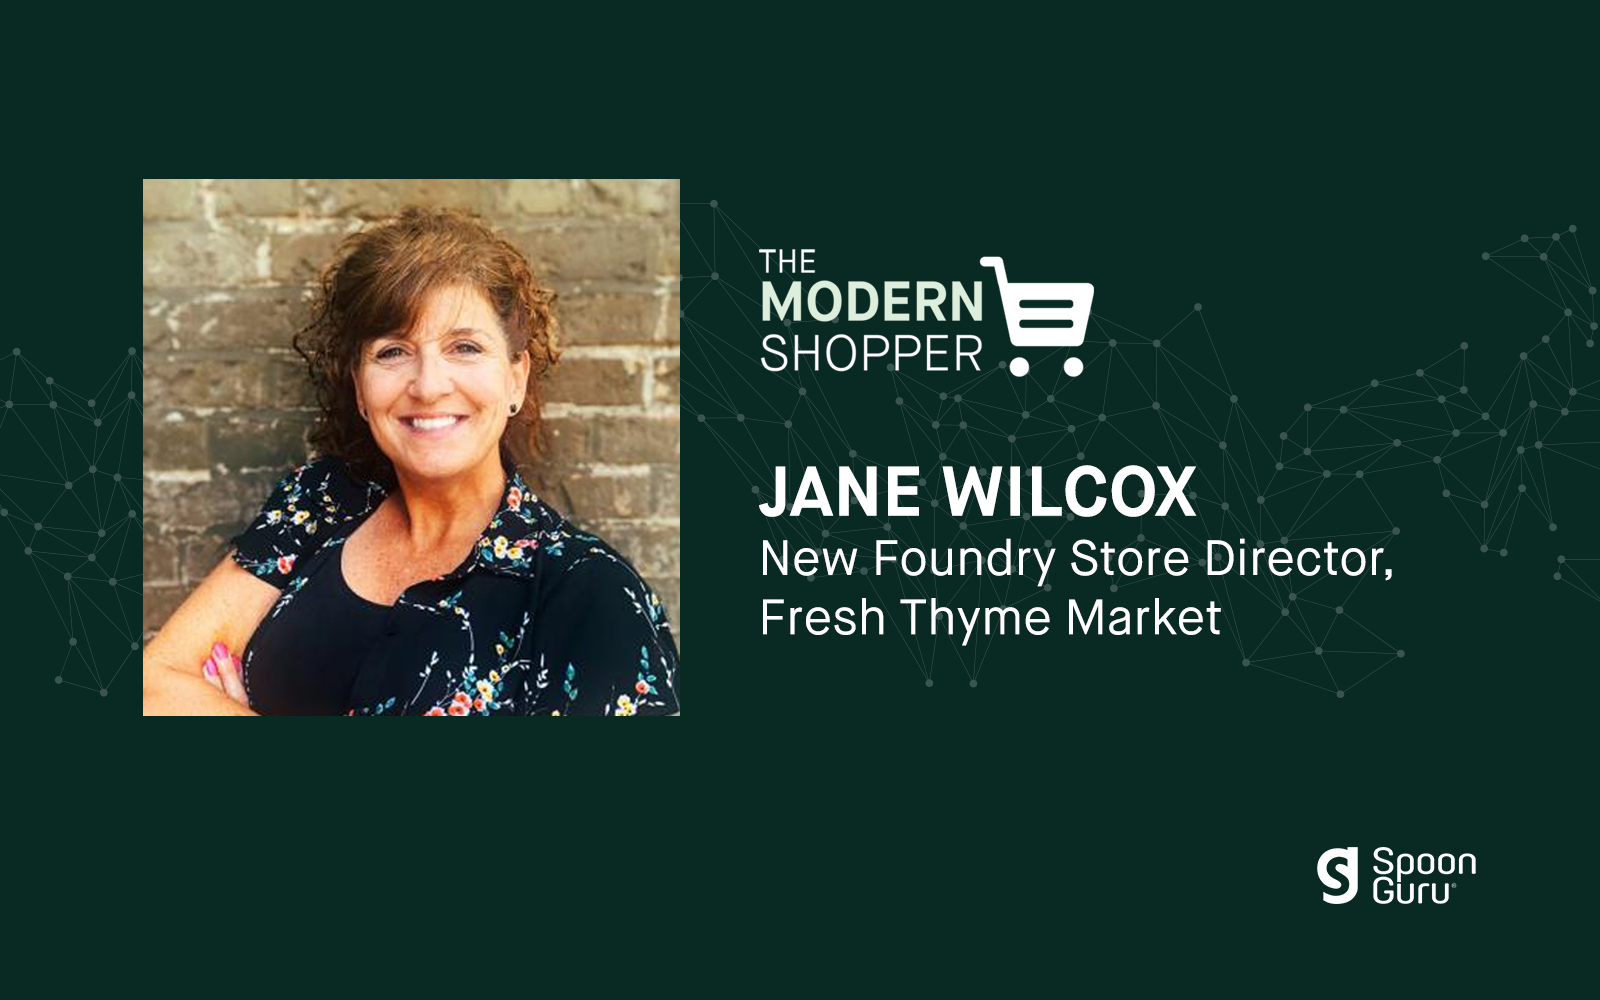 The Modern Shopper: Jane Wilcox from Fresh Thyme